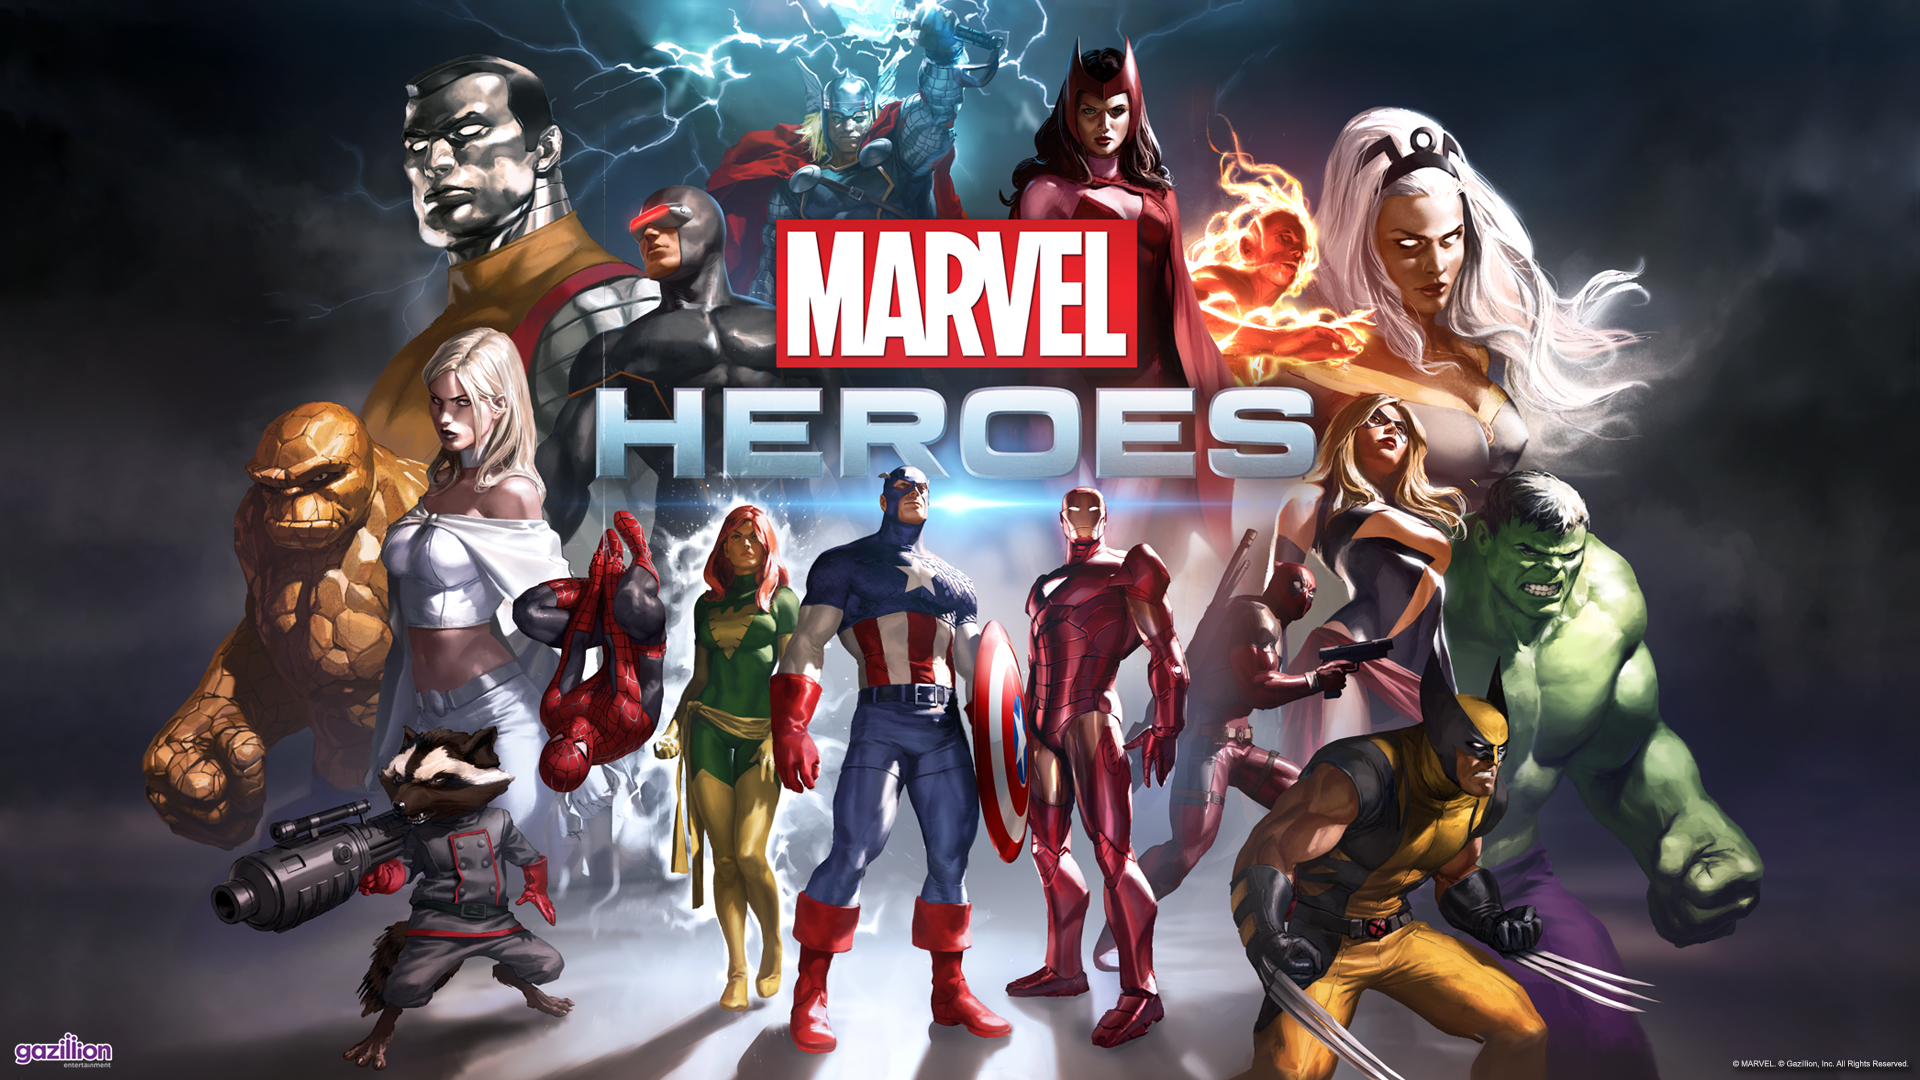 Marvel Heroes para Windows - Baixe gratuitamente na Uptodown